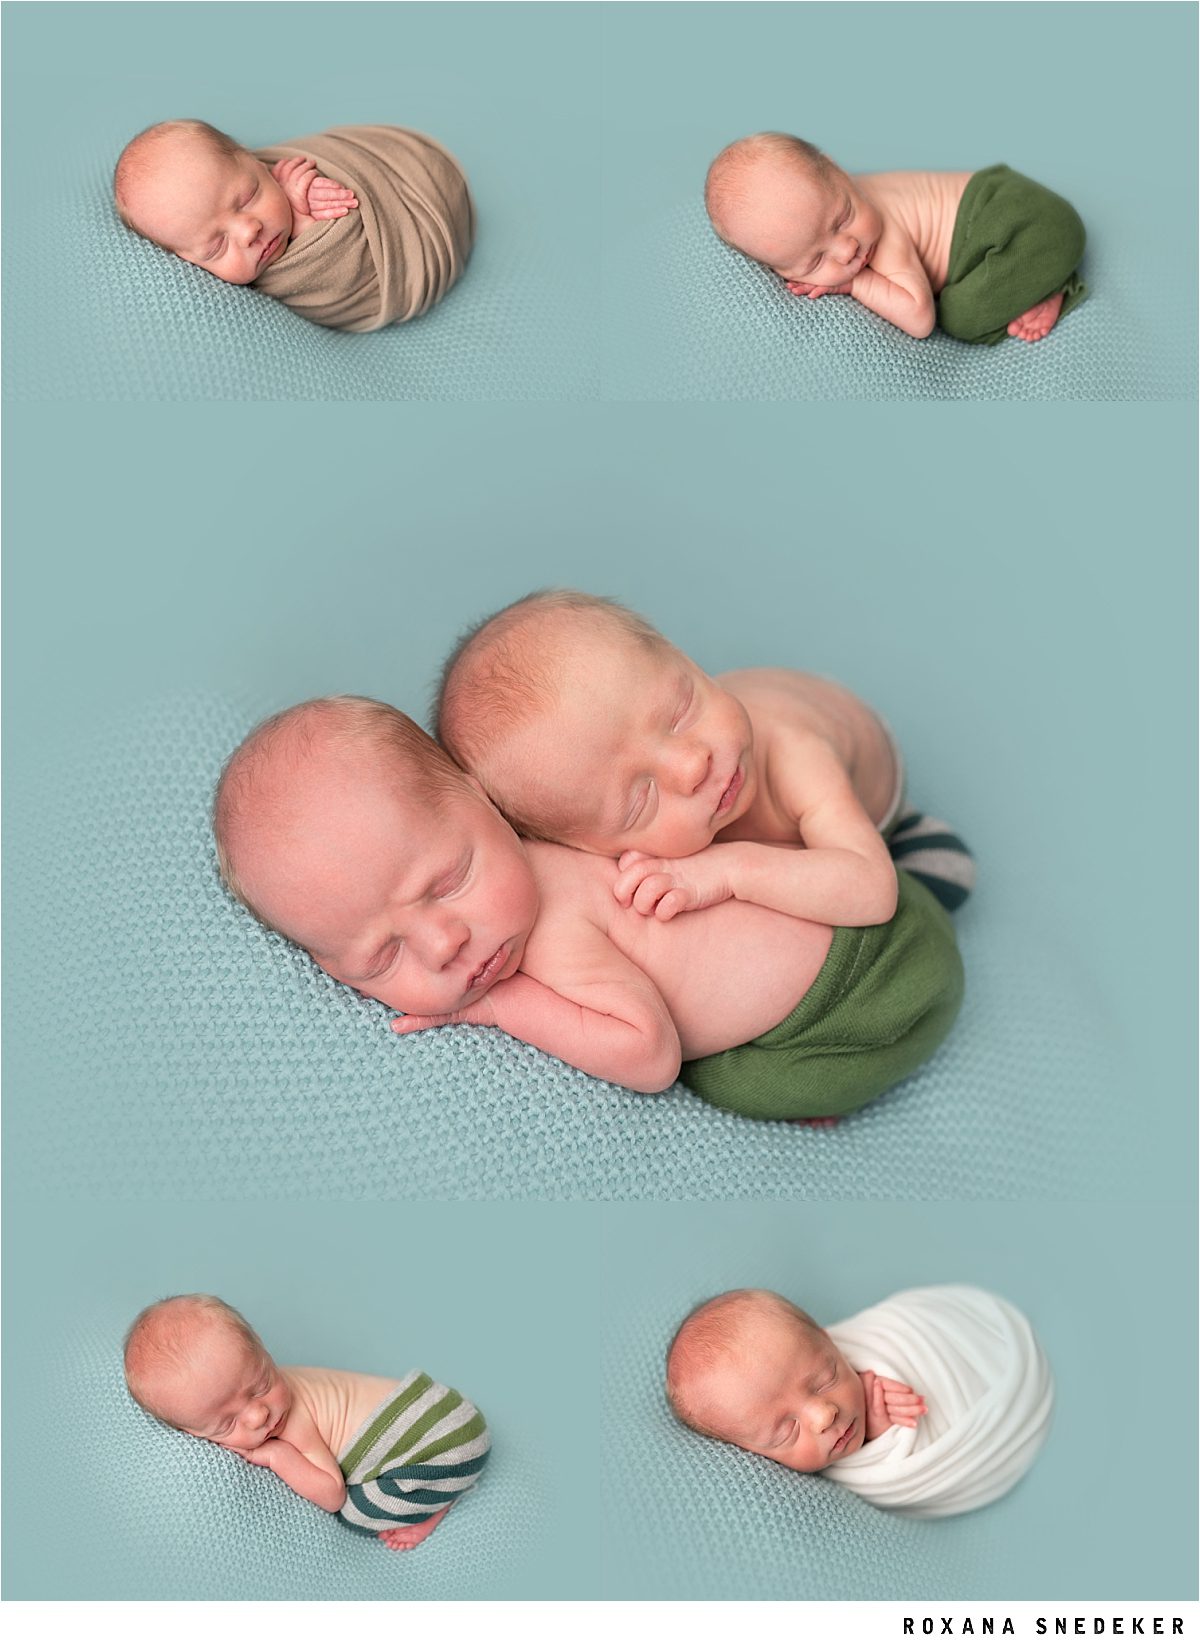 Noblesville, Indiana Newborn Photographer - Twins Studio Session